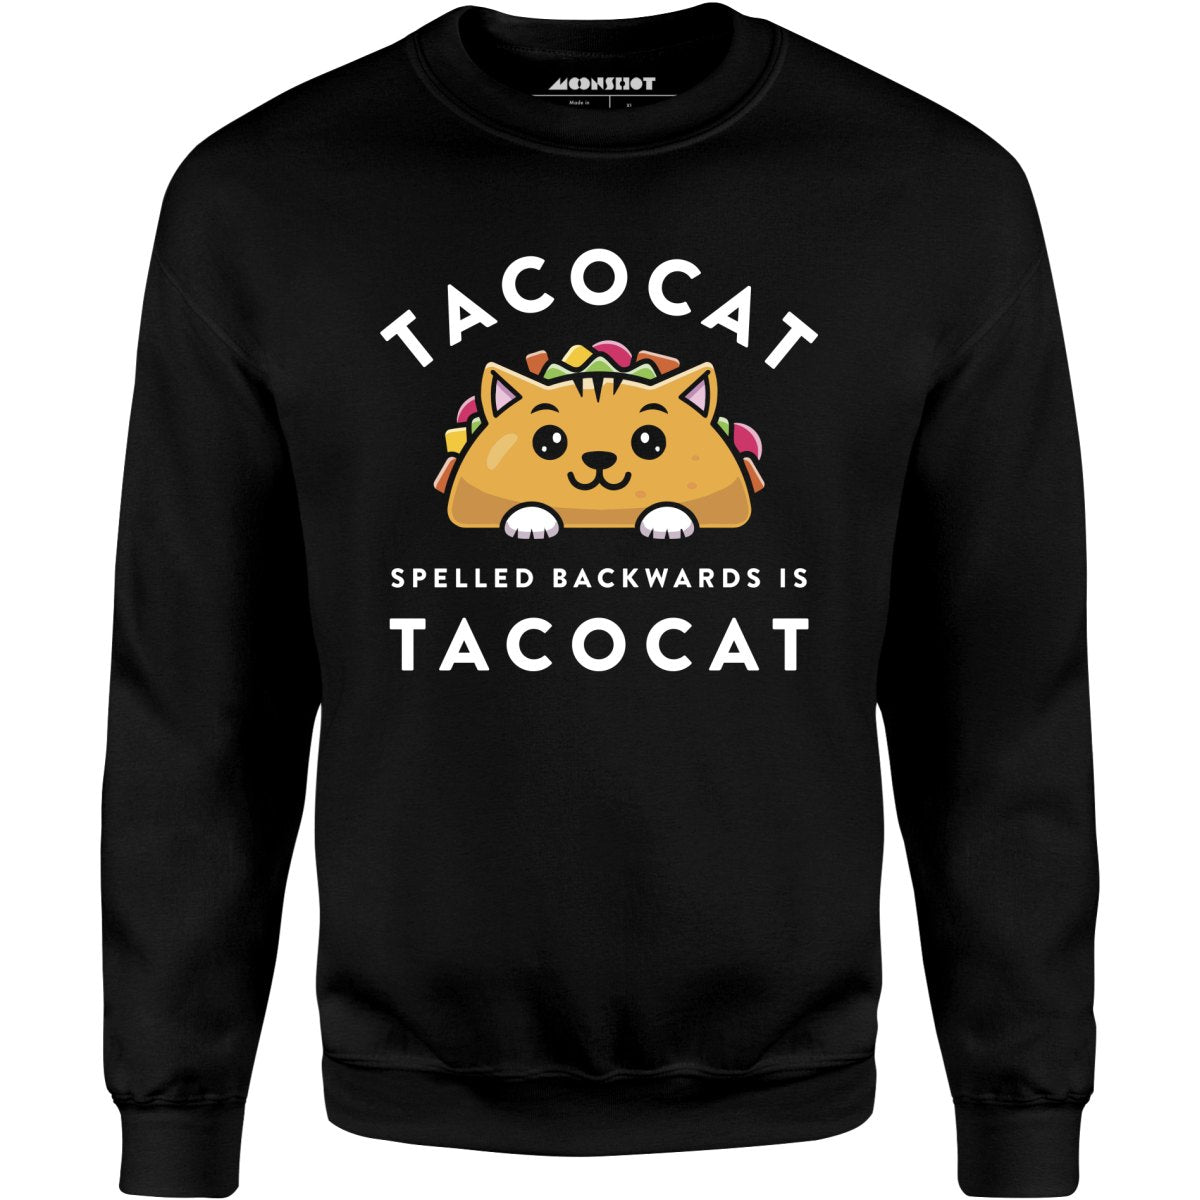 Tacocat Spelled Backwards - Unisex Sweatshirt